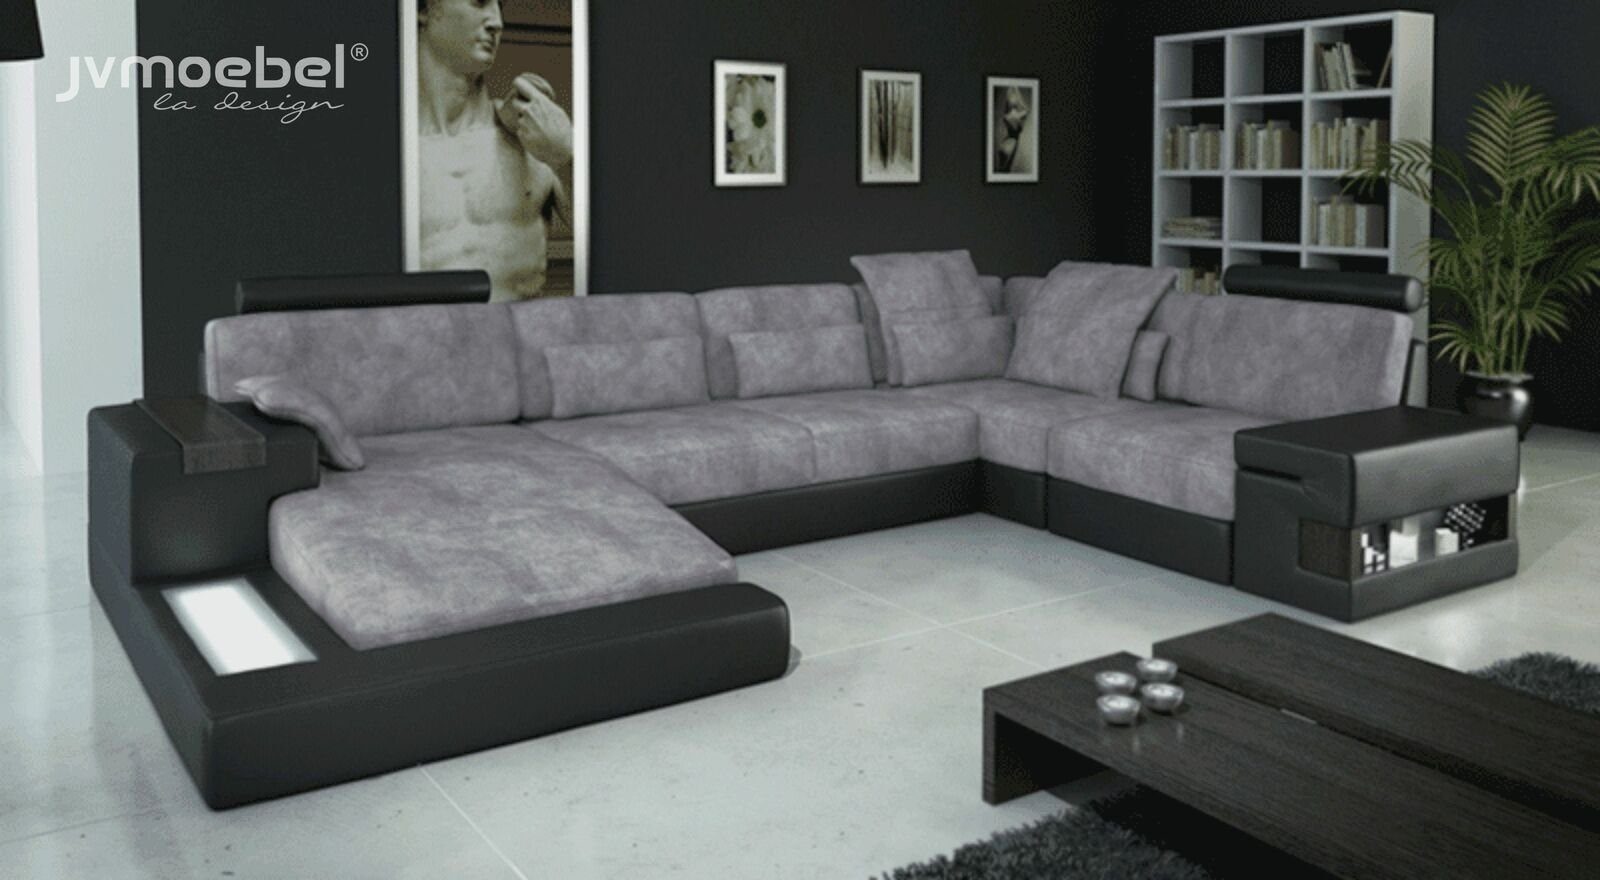 JVmoebel Ecksofa, Moderne Textil Sofa U-Form Möbel mit Bett Funktionen Stauraum Grau NEU